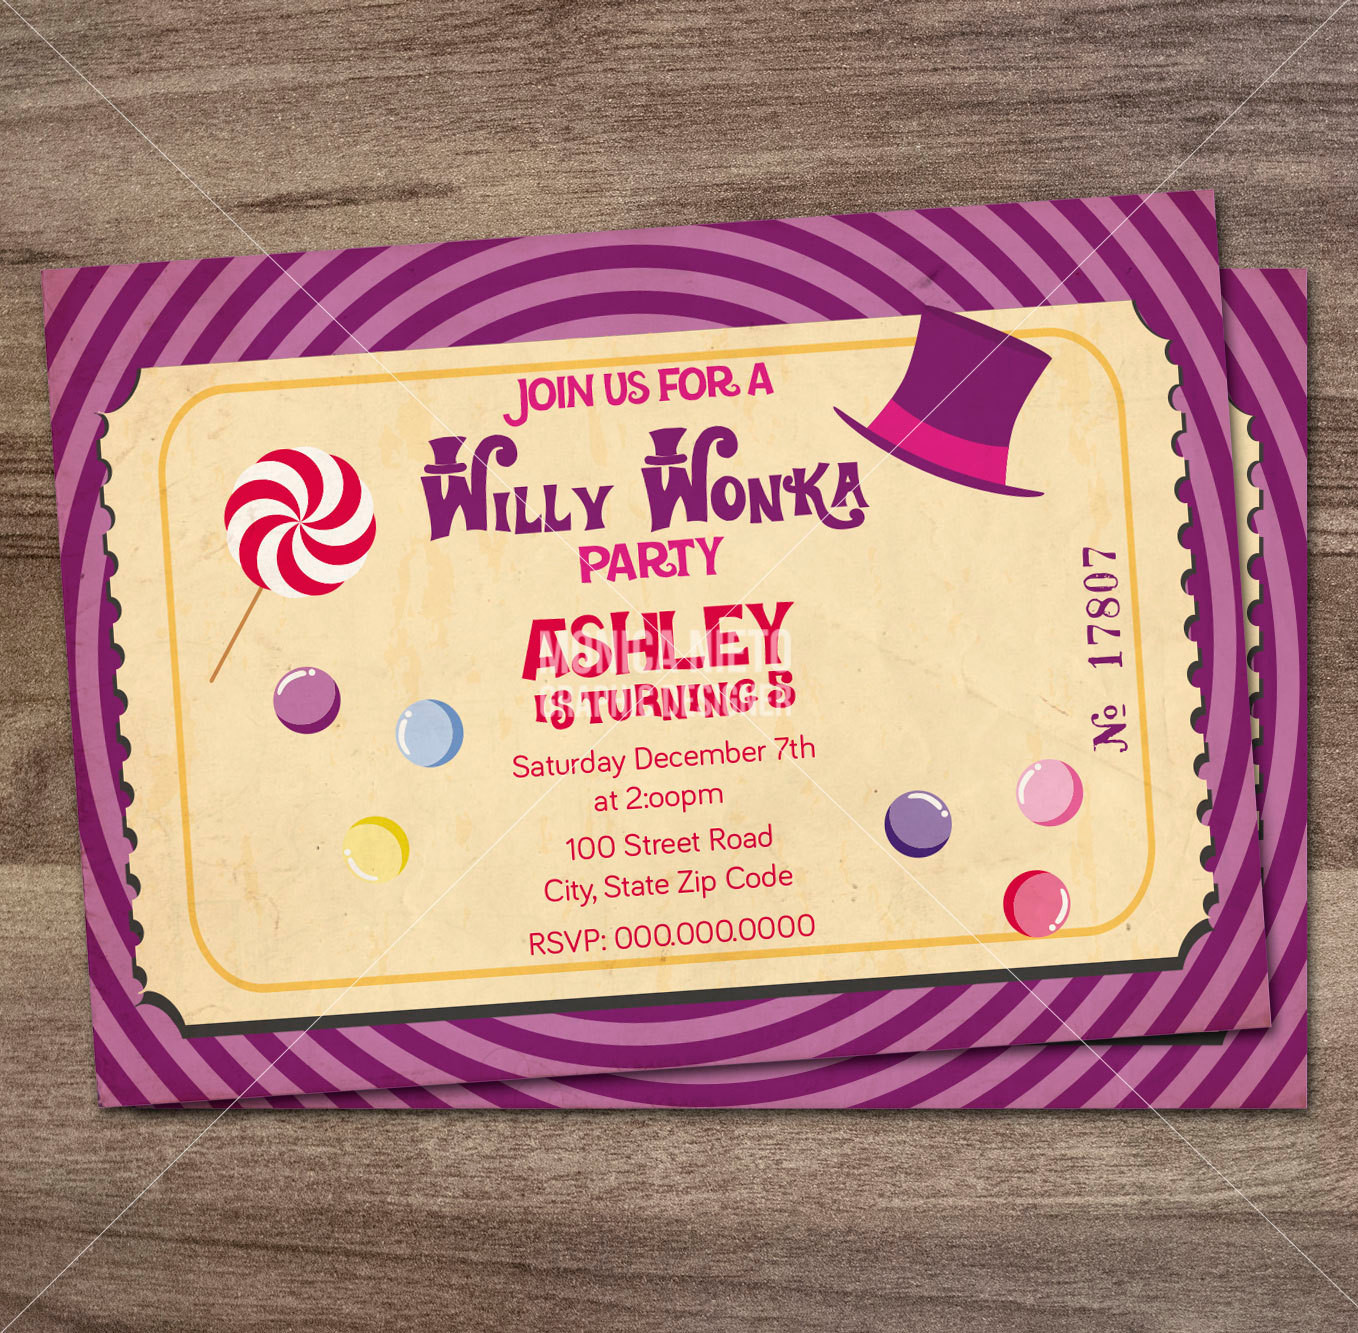 Willy Wonka Birthday Invitations
 Willy Wonka Birthday Party Invitation Charlie and the